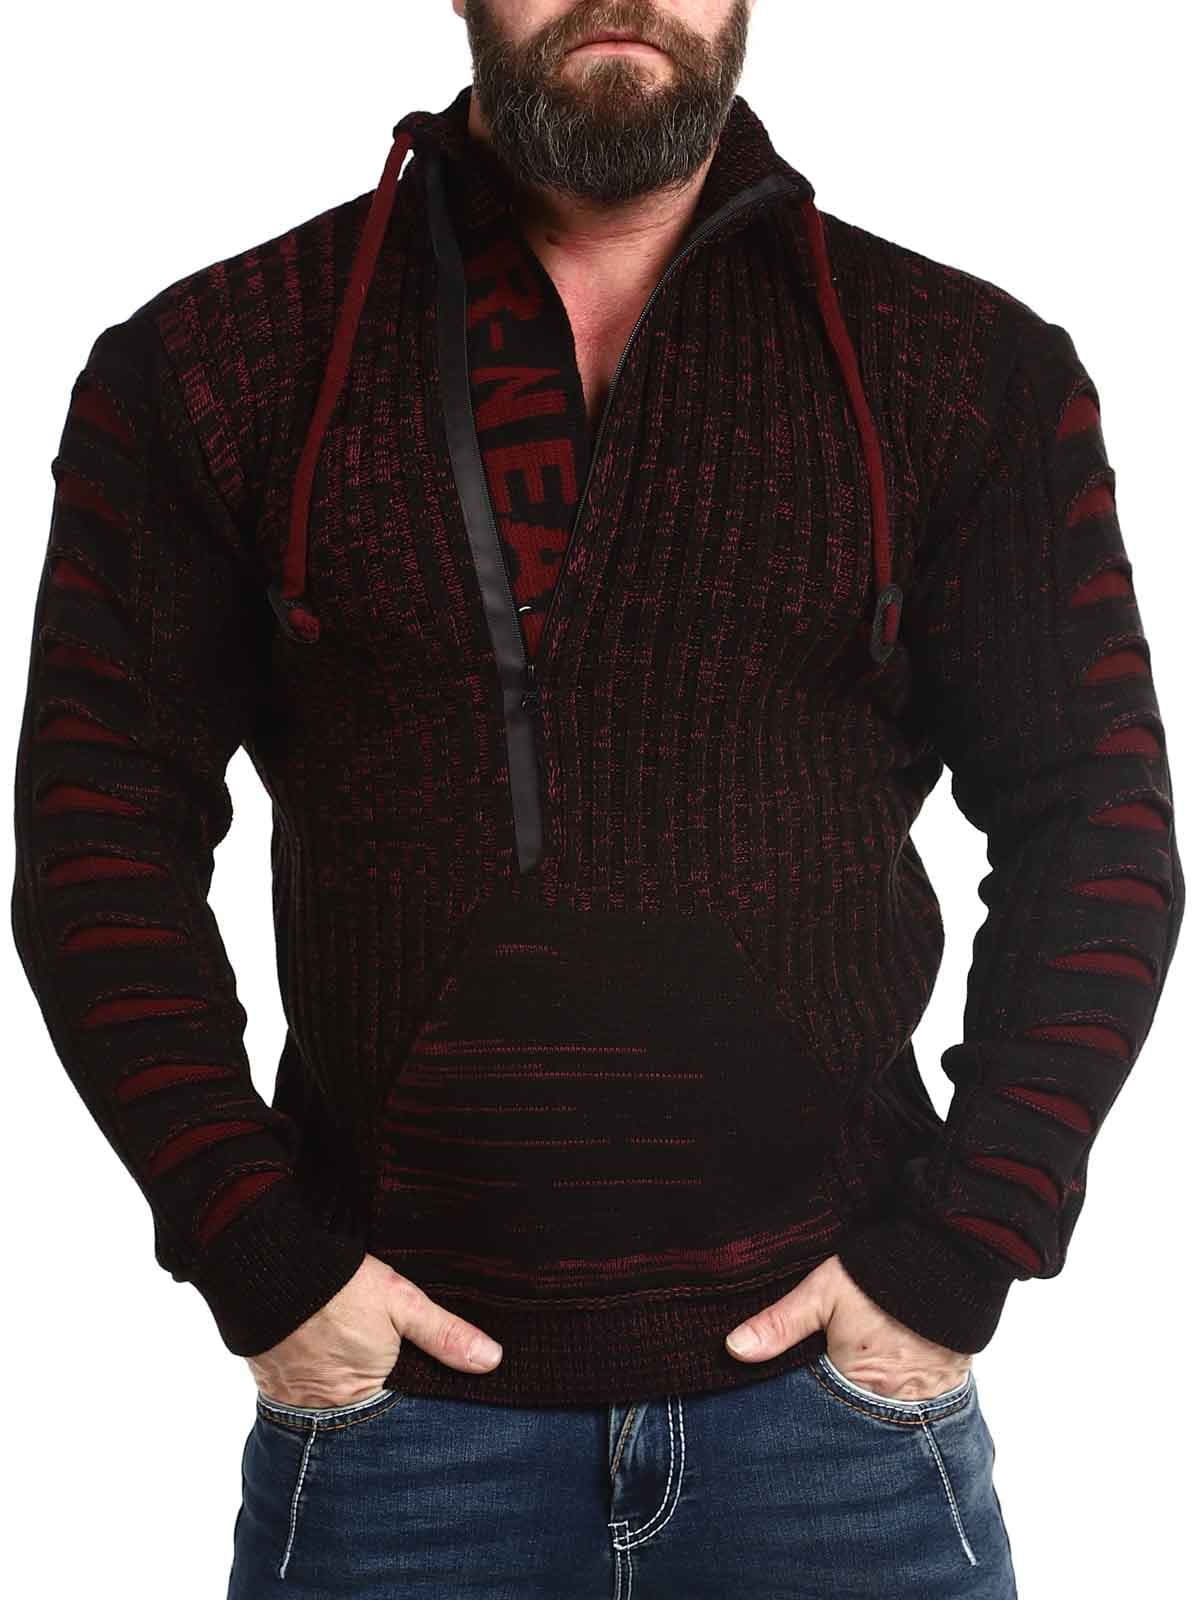 Bartoli Sweater Black WineRed_1.jpg